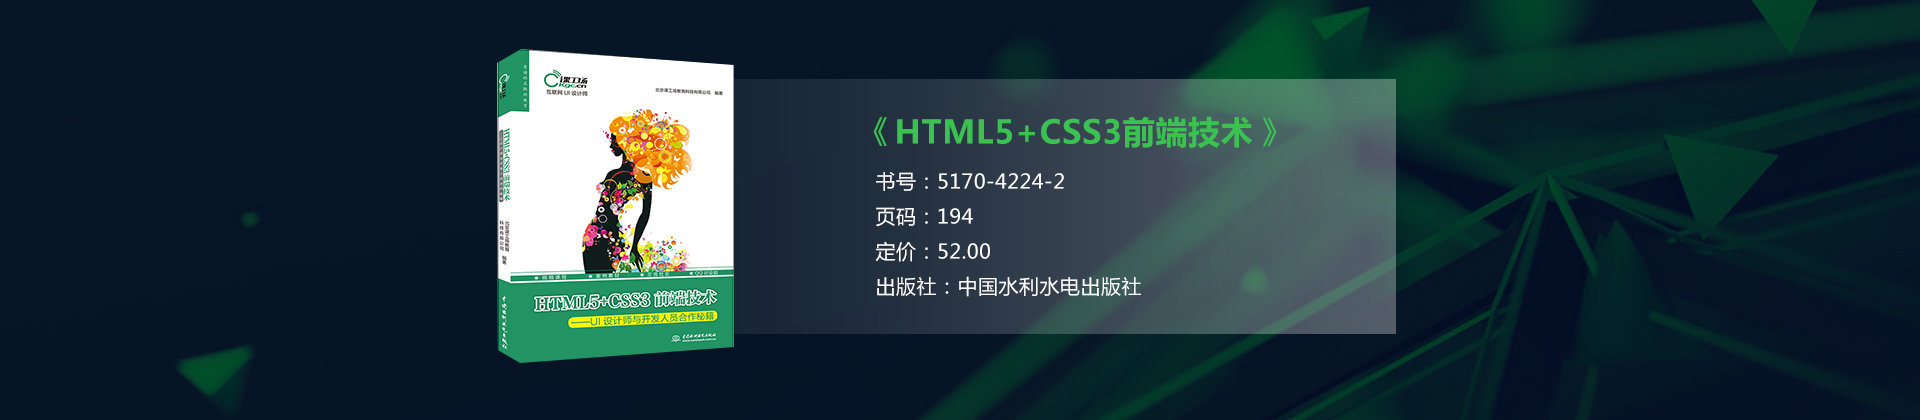 HTML5+CSS3前端技术